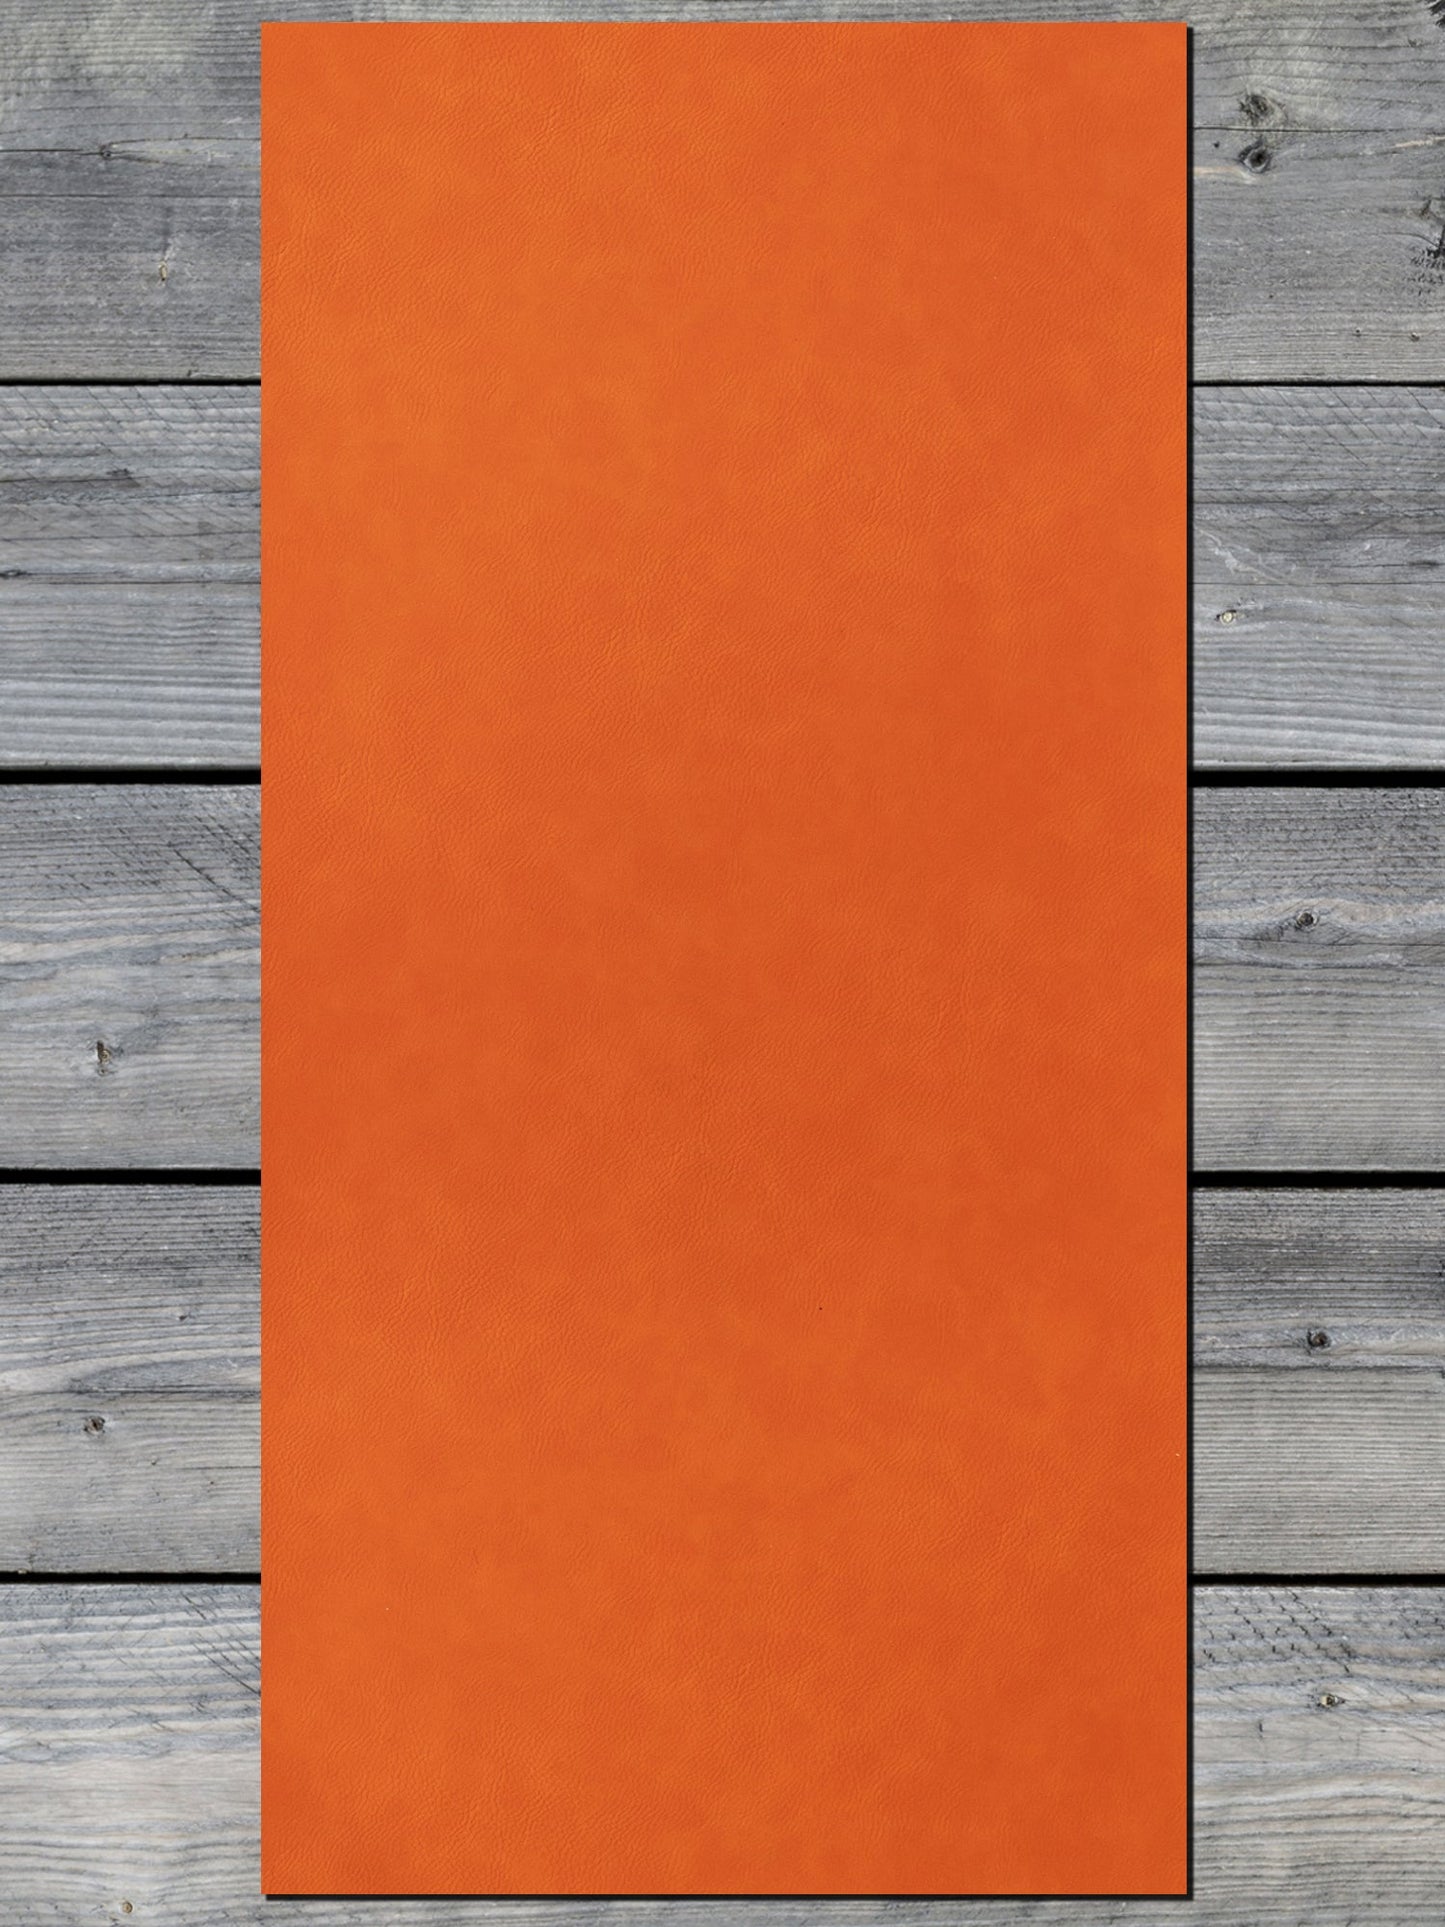 Orange / Black Durra-Bull Premium Leatherette™ Sheets (12x24) - #LoneStar Adhesive#